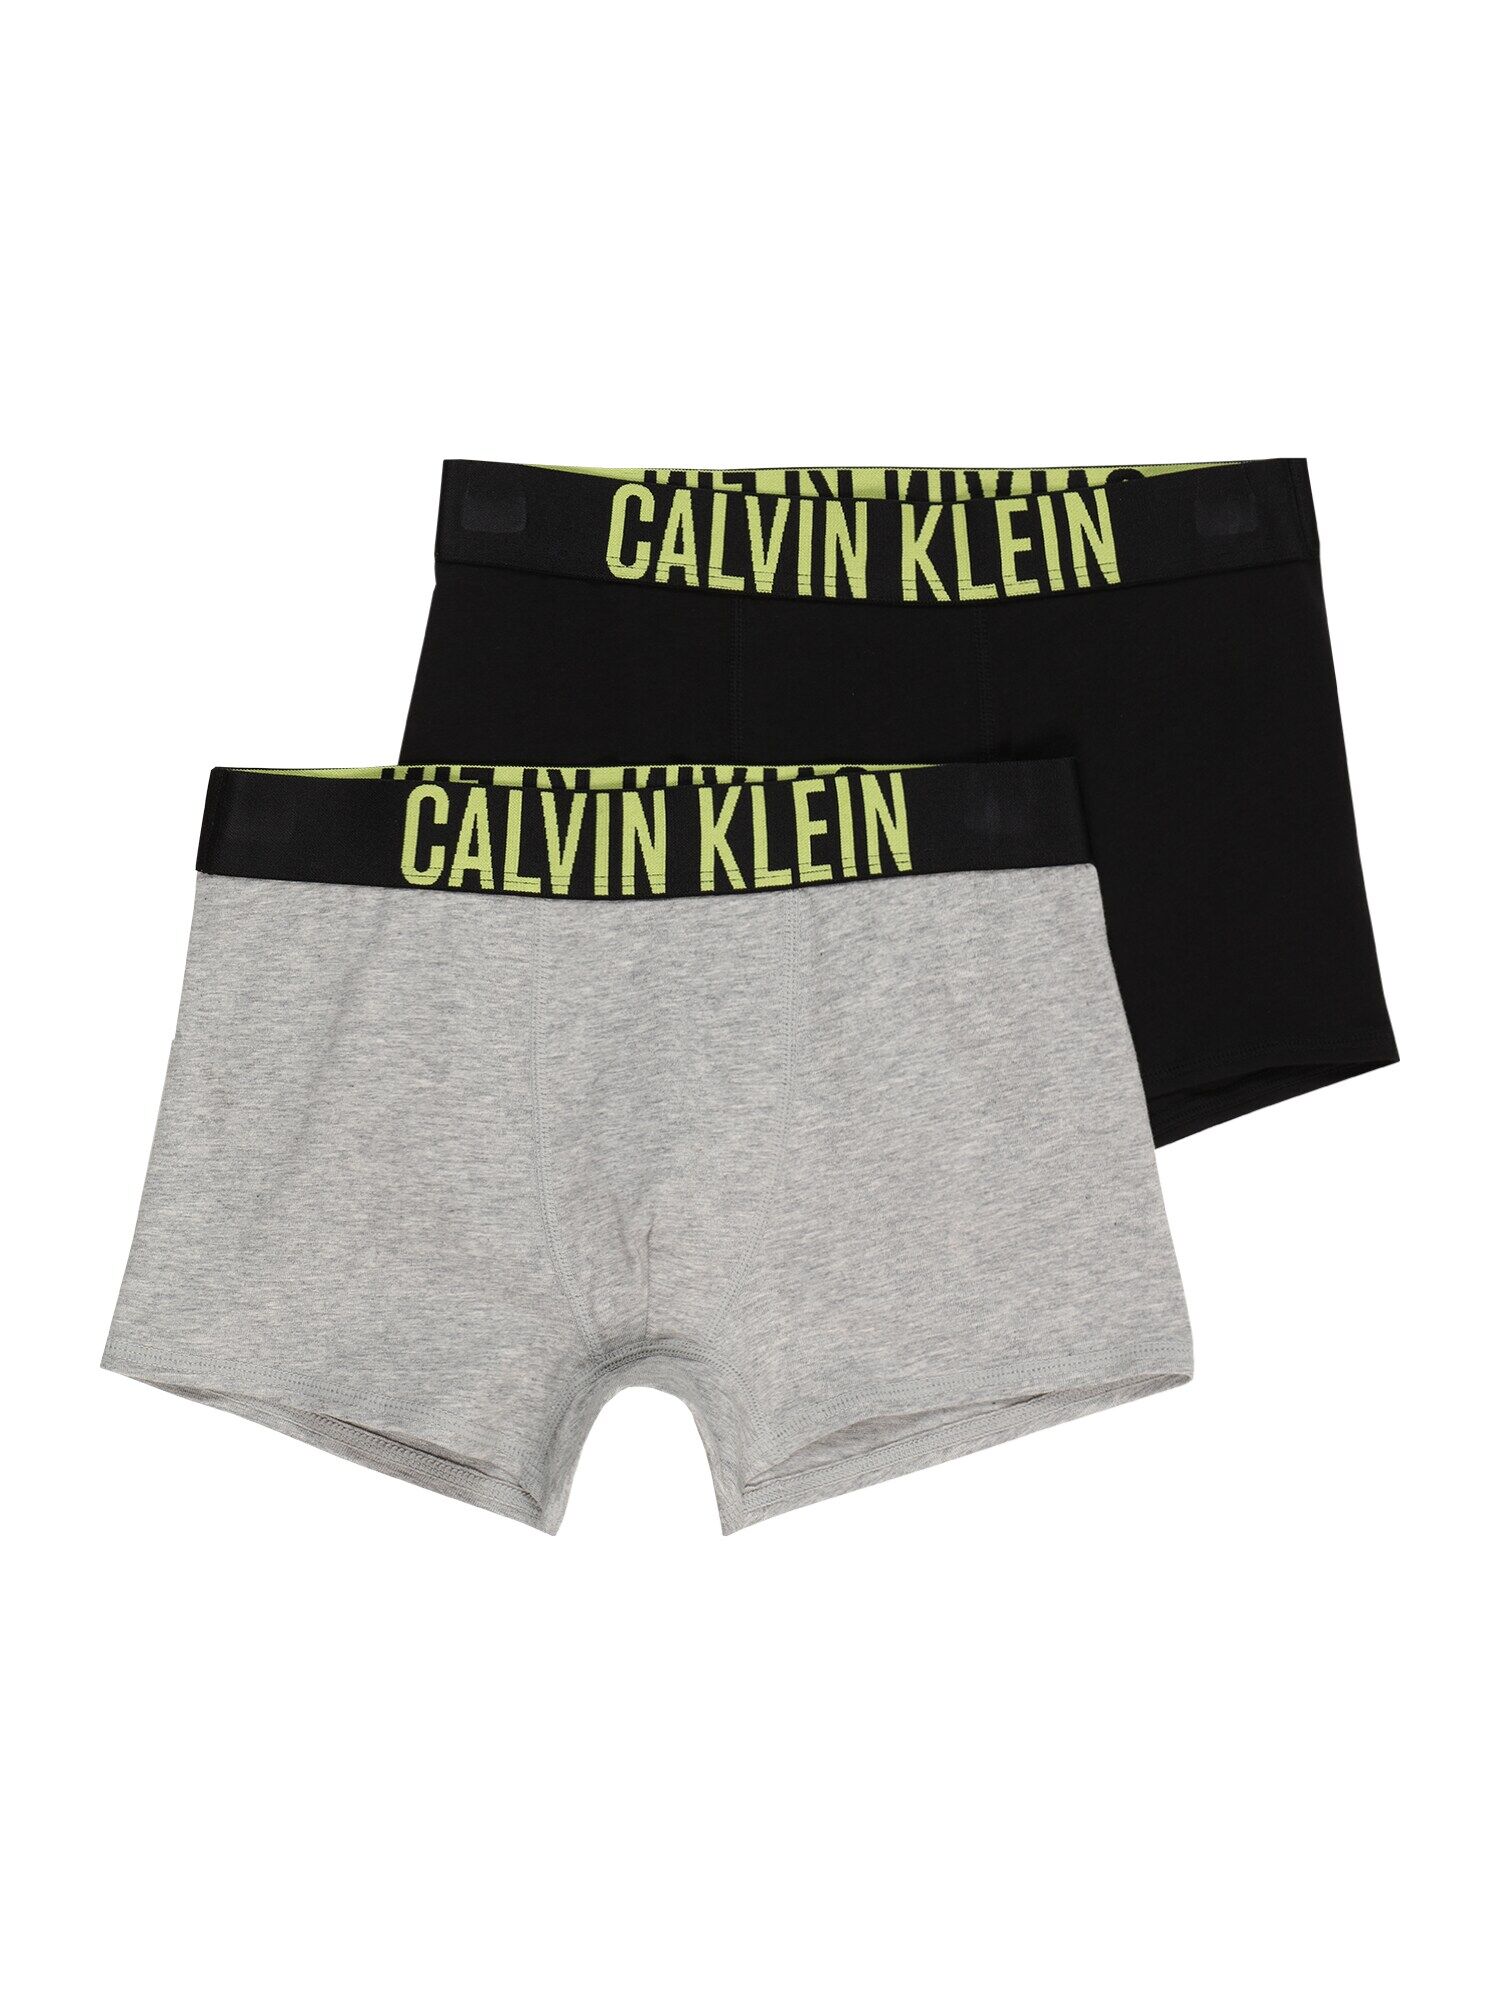 Calvin Klein Underwear Pantaloncini intimi Grigio, Nero